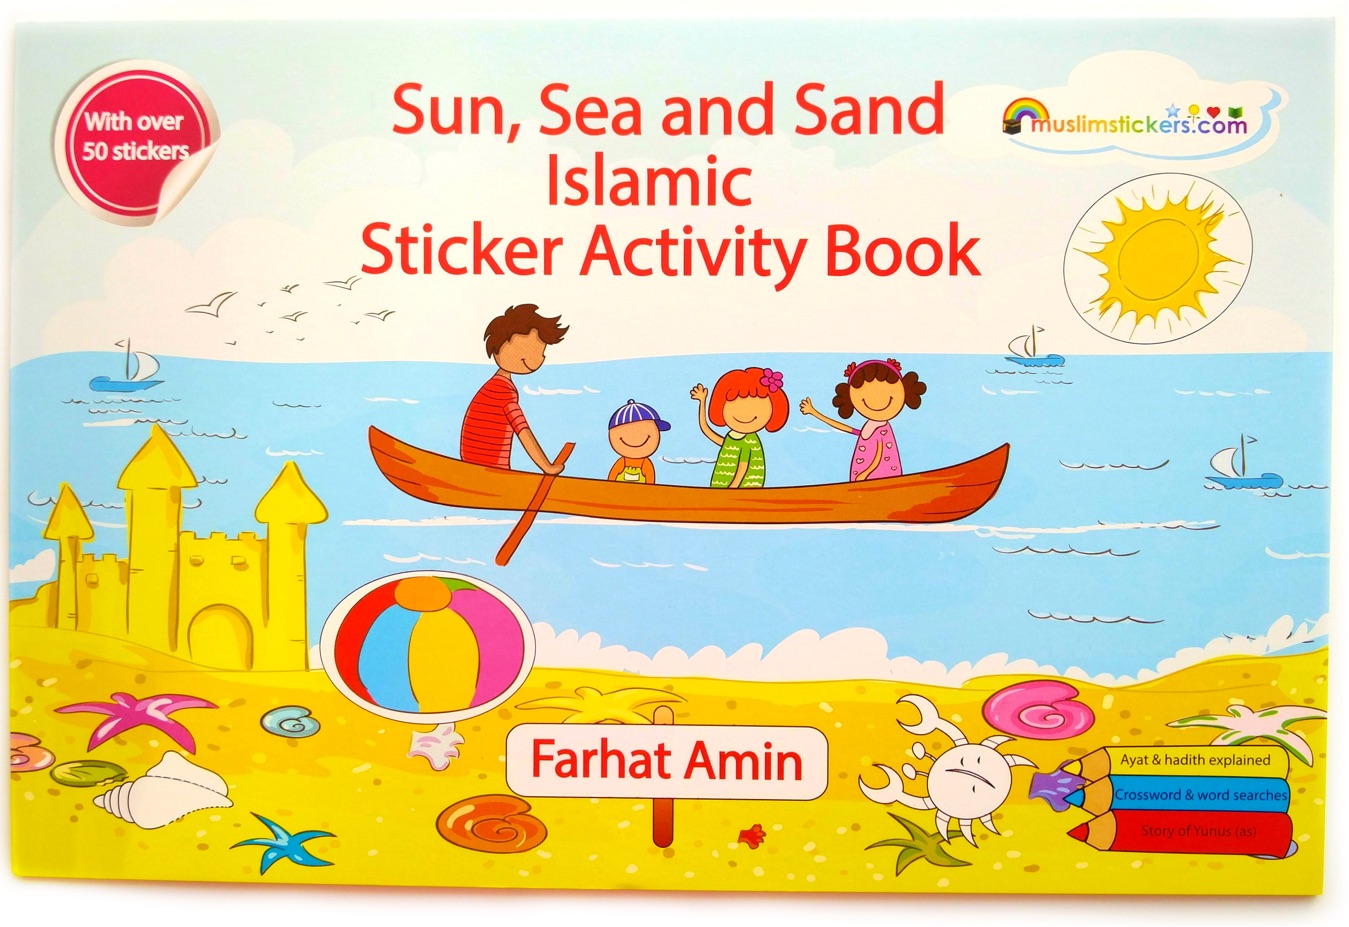 Sun, Sea and Sand Sticker Activity Book